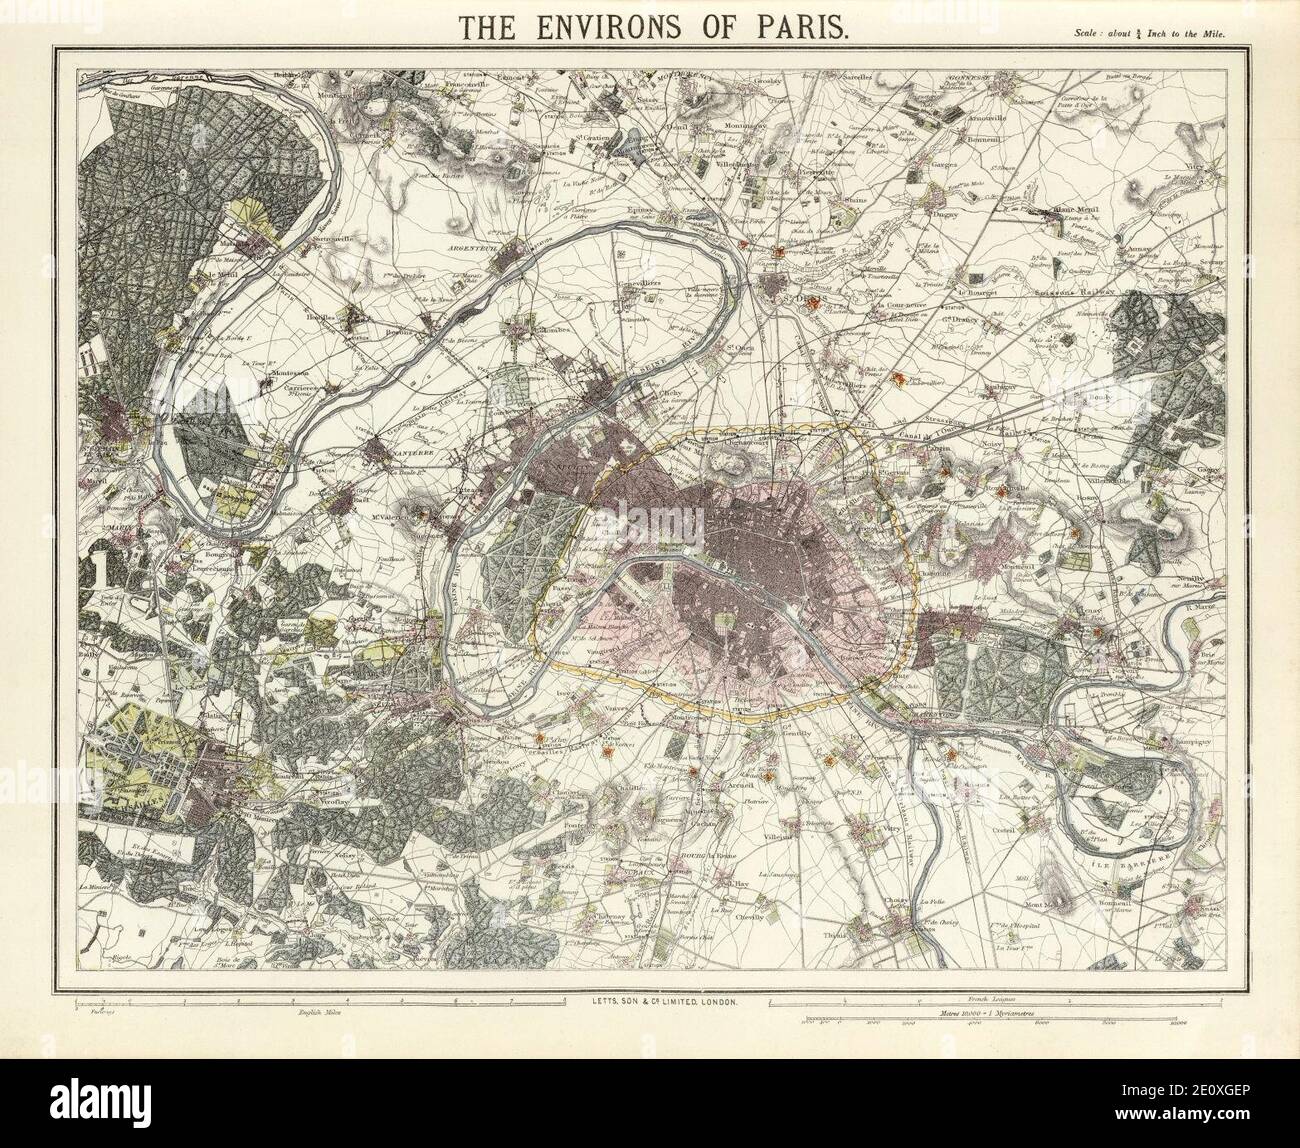 Letts, Umgebung von Paris, 1883 - David Rumsey. Stockfoto